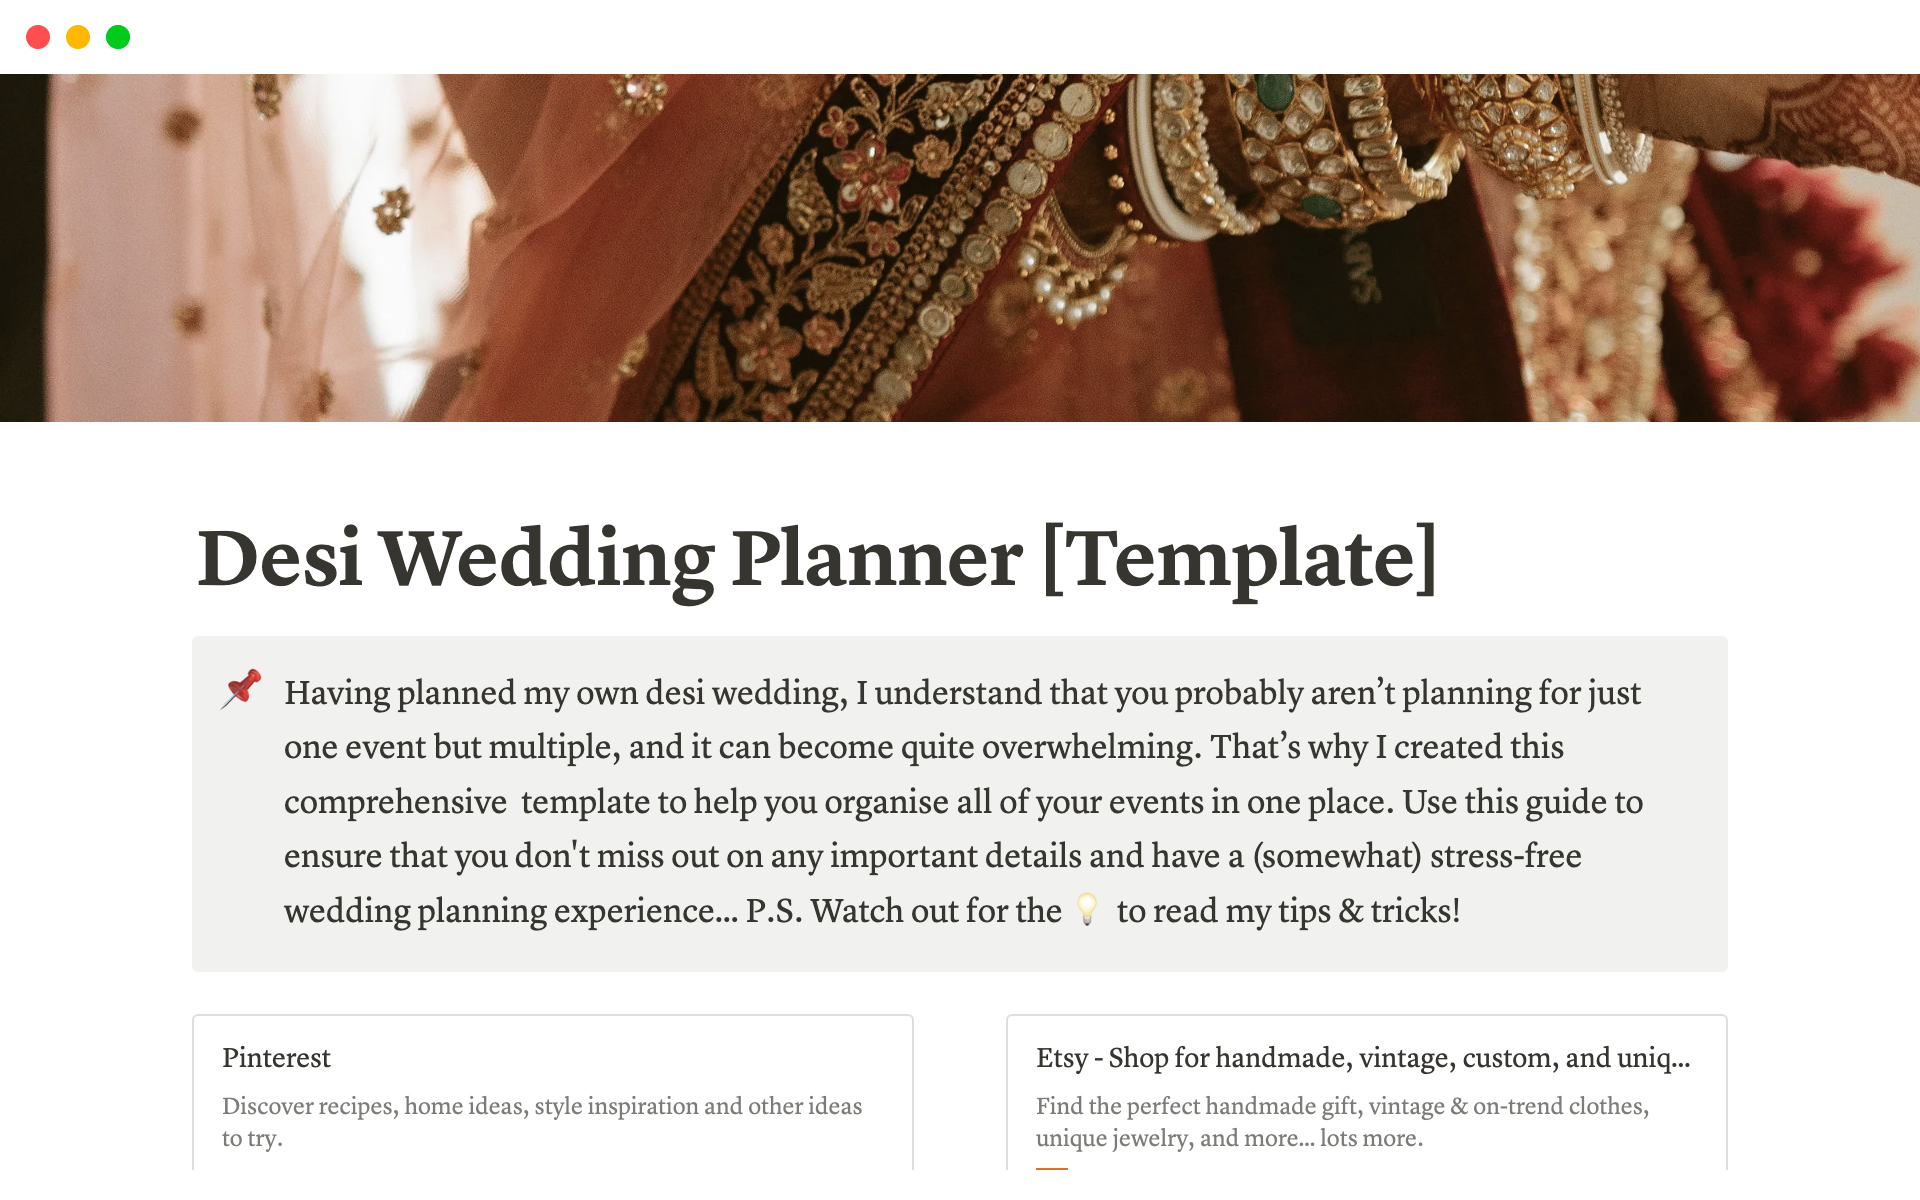 Aperçu du modèle de Desi Wedding Planner